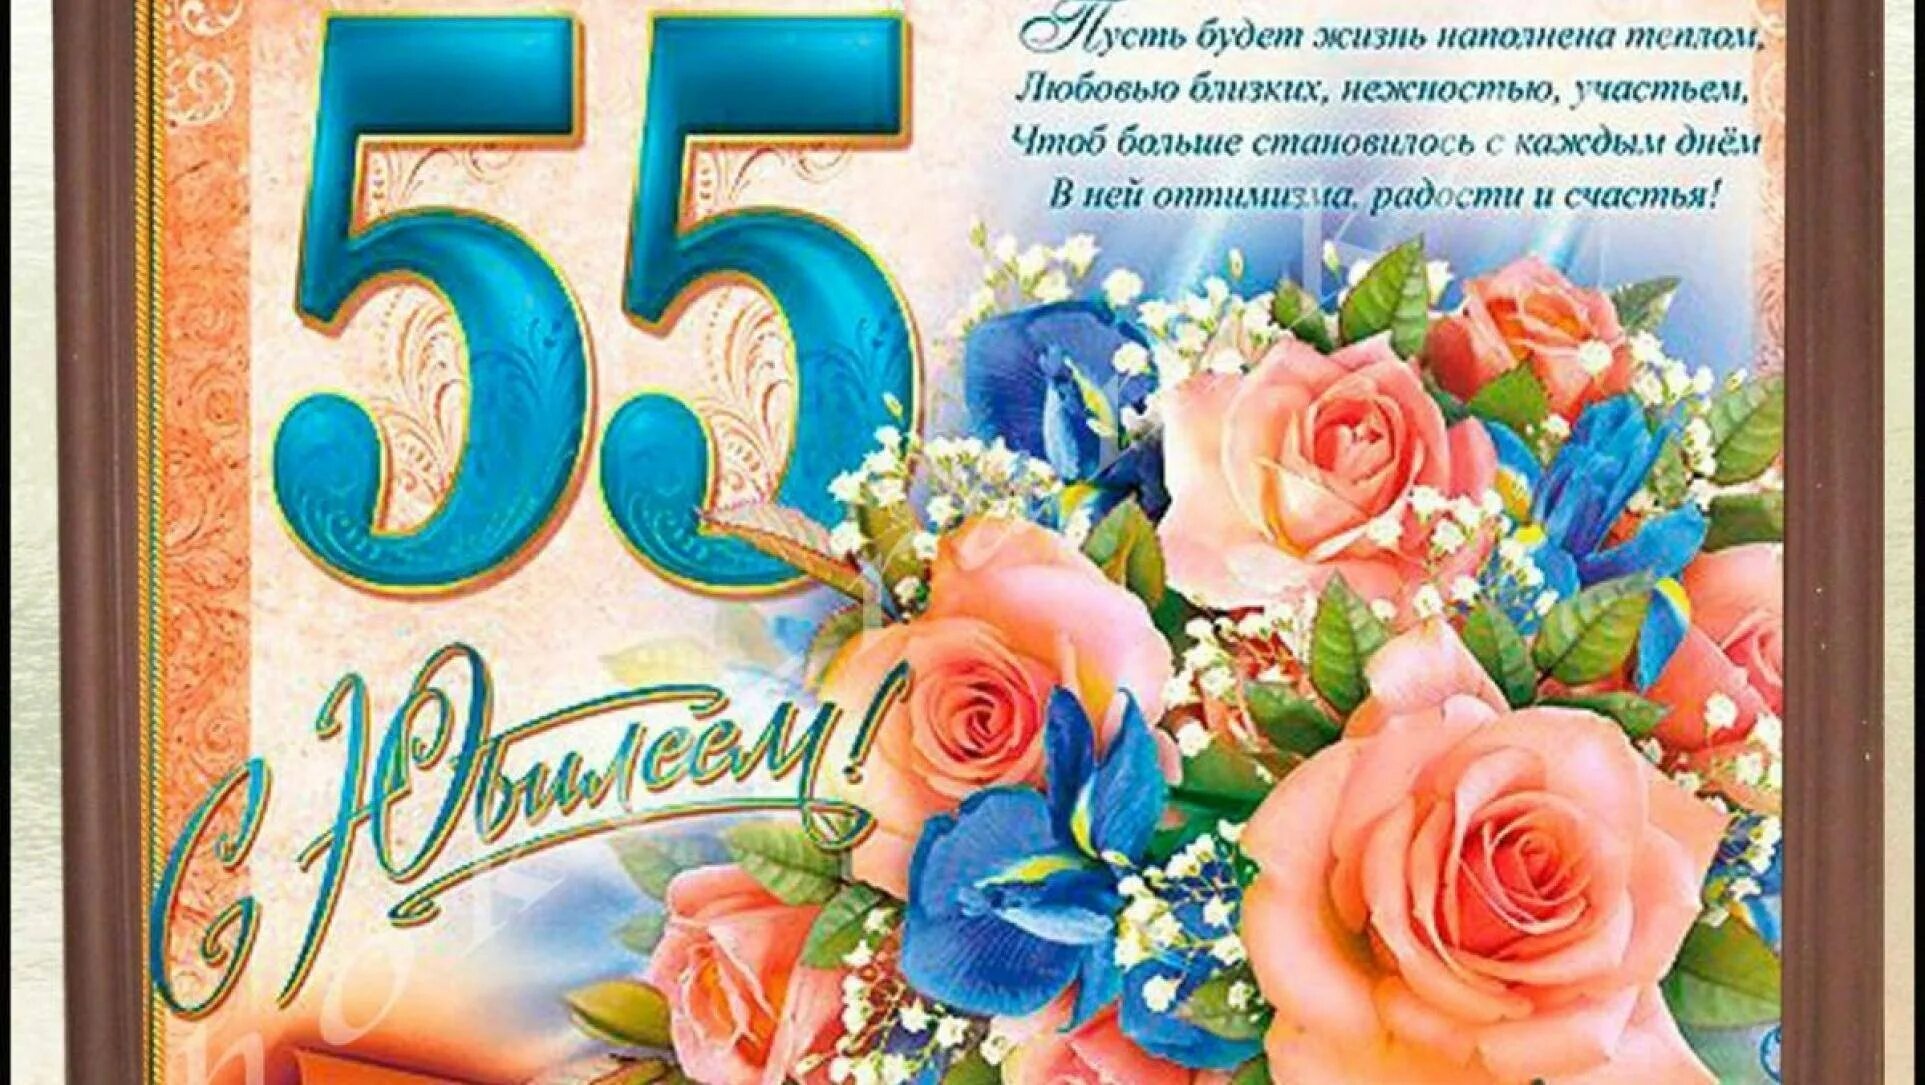 Найти открытку с юбилеем. С юбилеем 55. Поздравление с юбилеем 55 женщине. Открытка "с юбилеем! 55". Открытка с юбилеем 55 лет женщине с поздравлением.